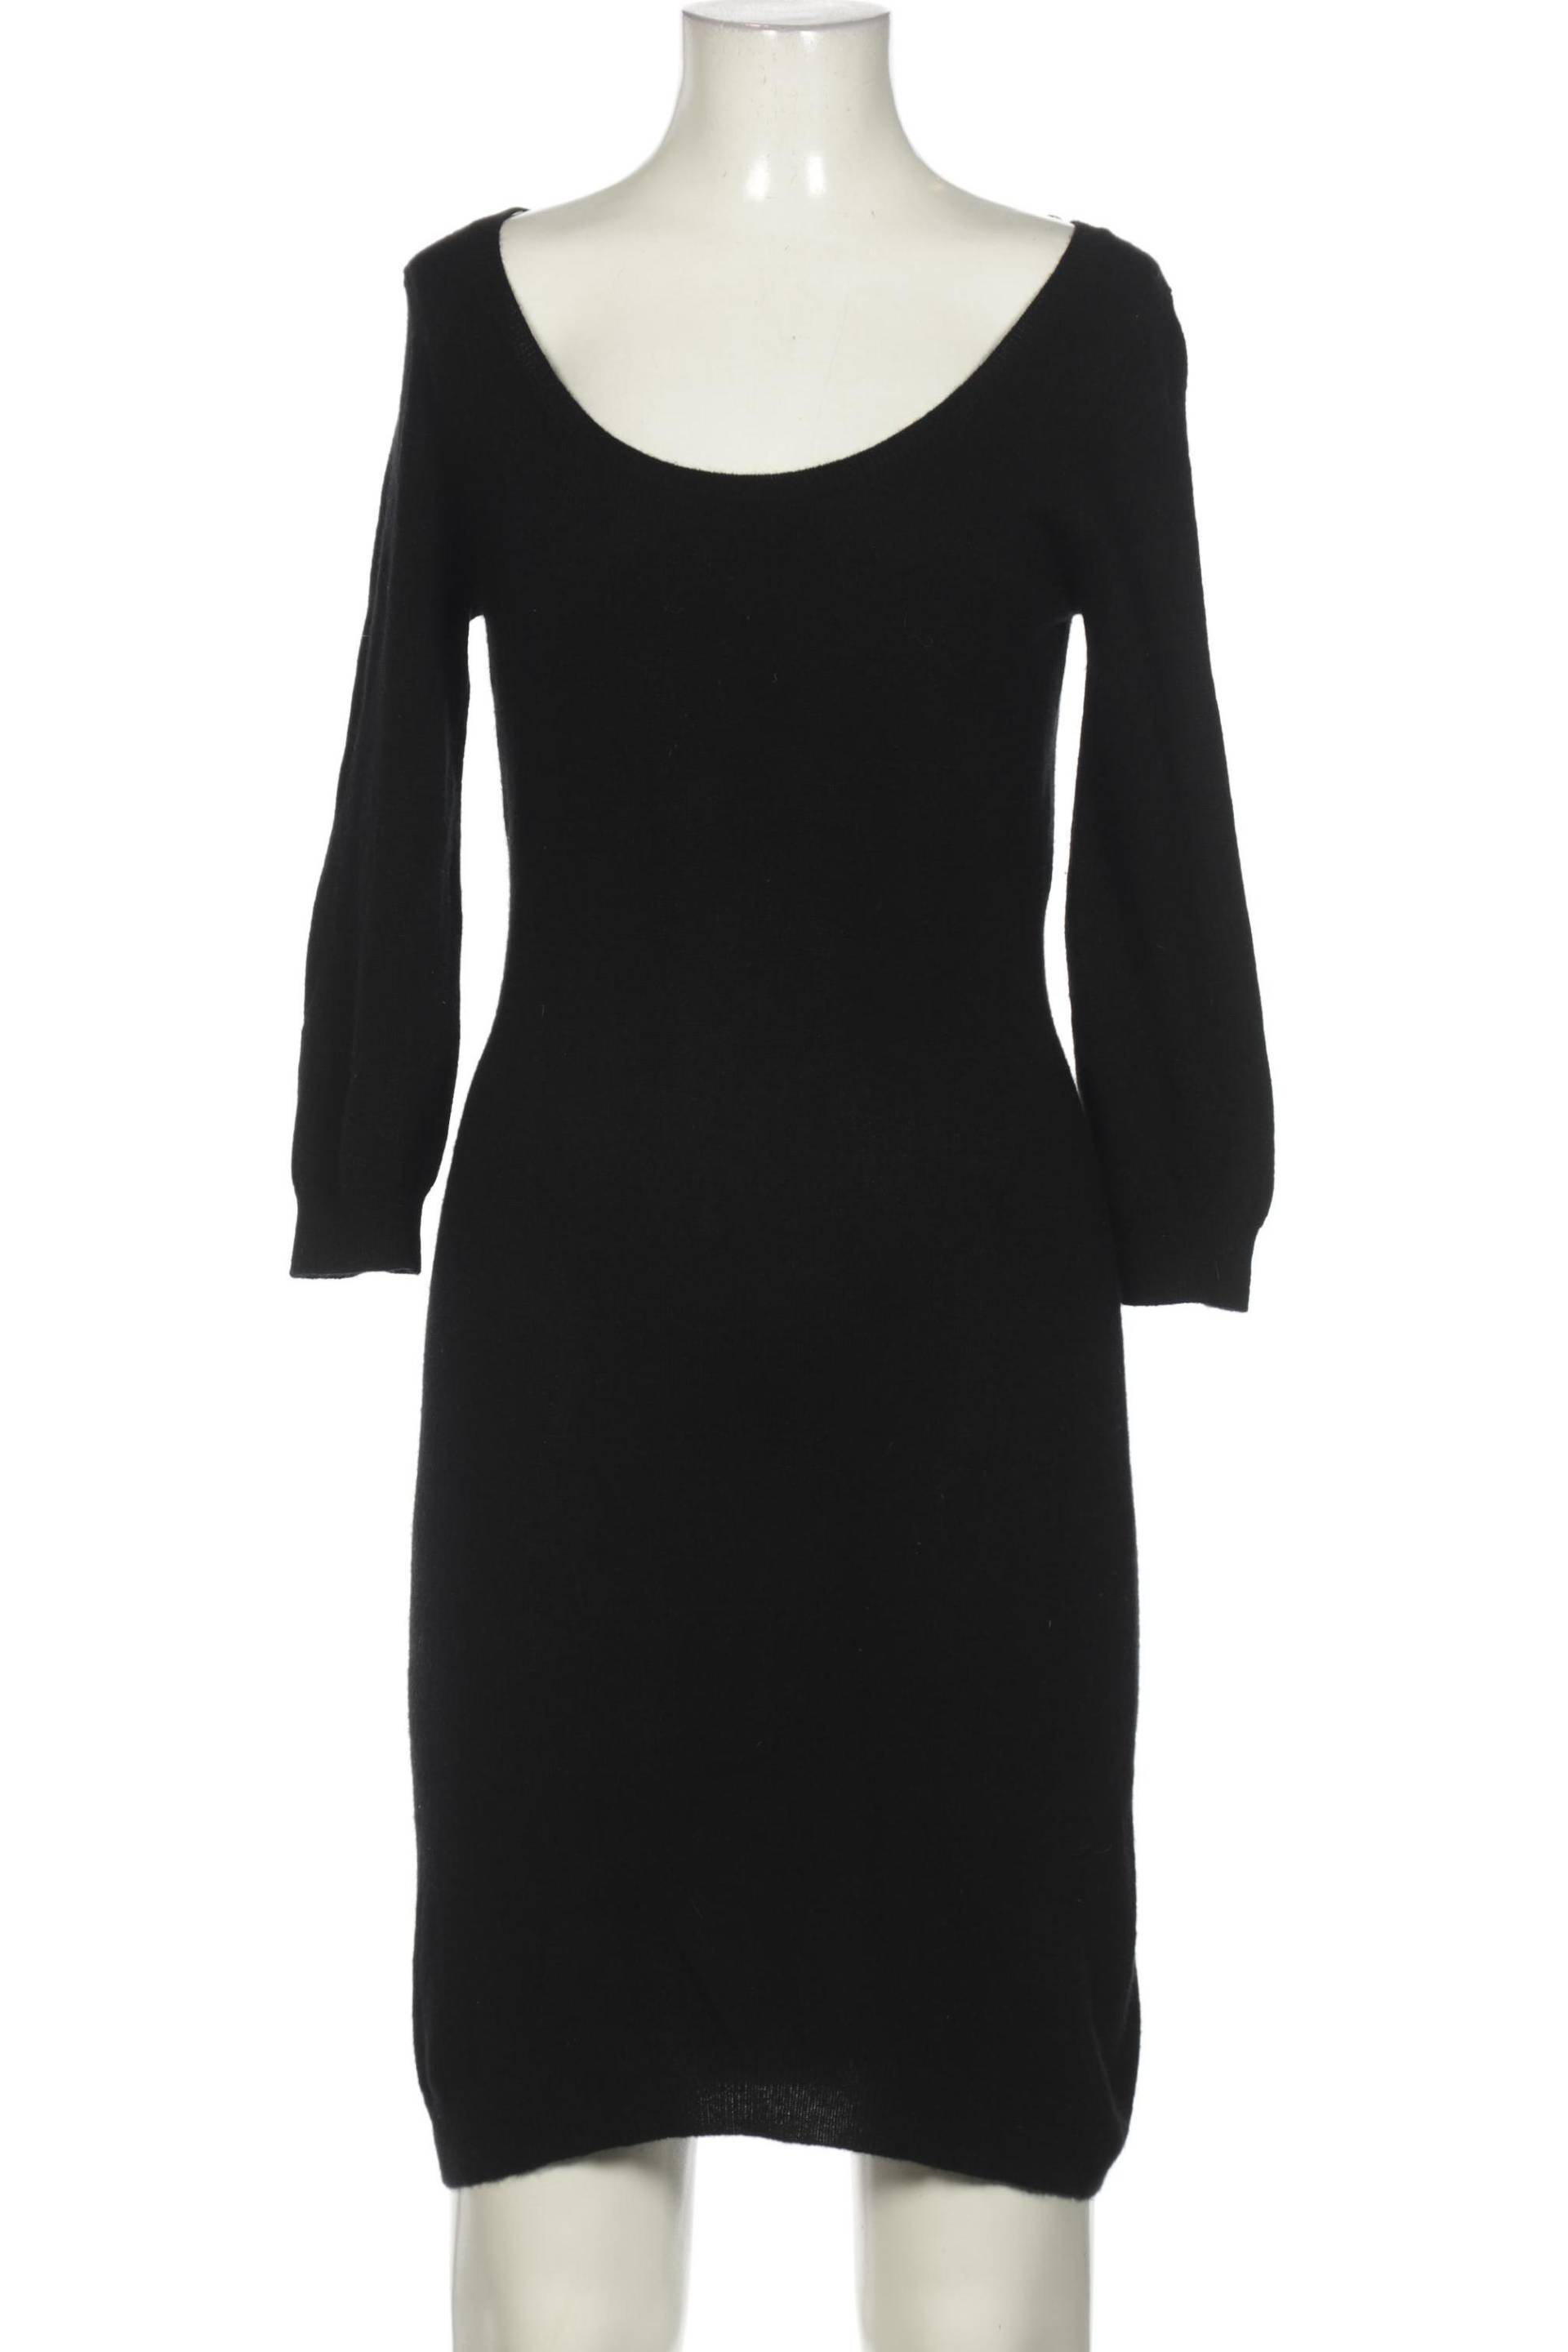 Repeat Damen Kleid, schwarz, Gr. 34 von Repeat